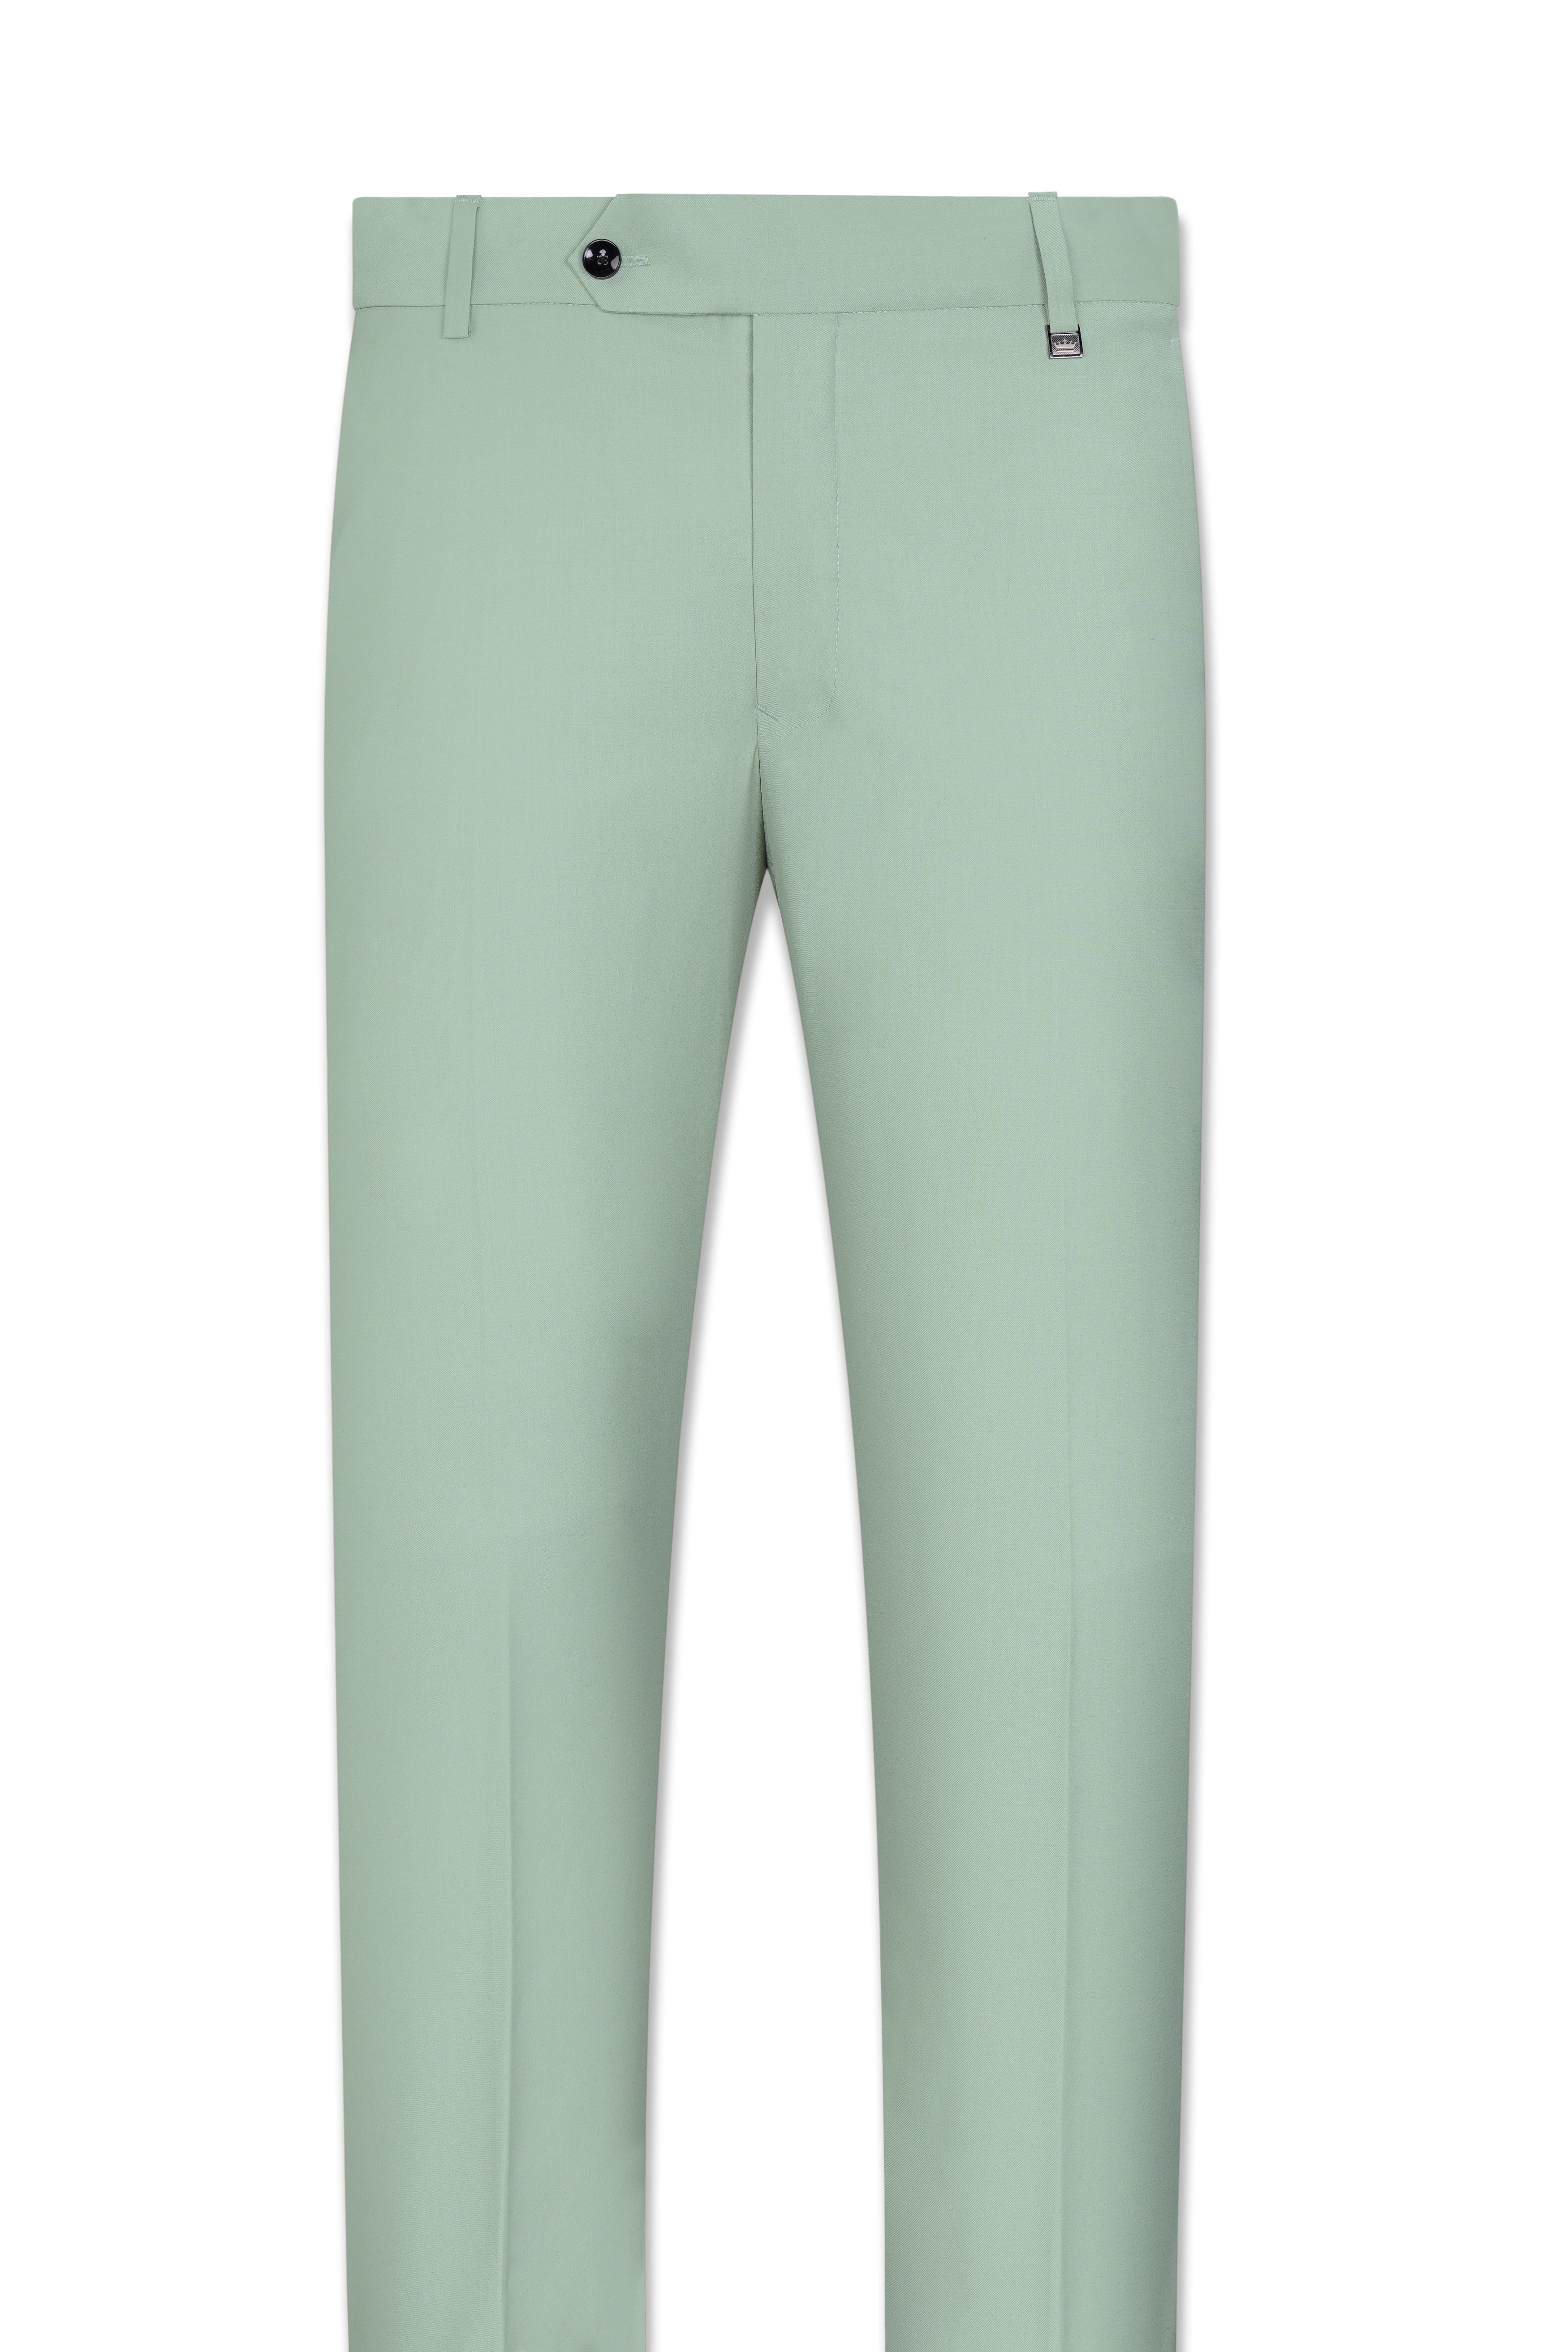 YK CROWN Slim Fit Men Light Green Trousers - Buy YK CROWN Slim Fit Men Light  Green Trousers Online at Best Prices in India | Flipkart.com